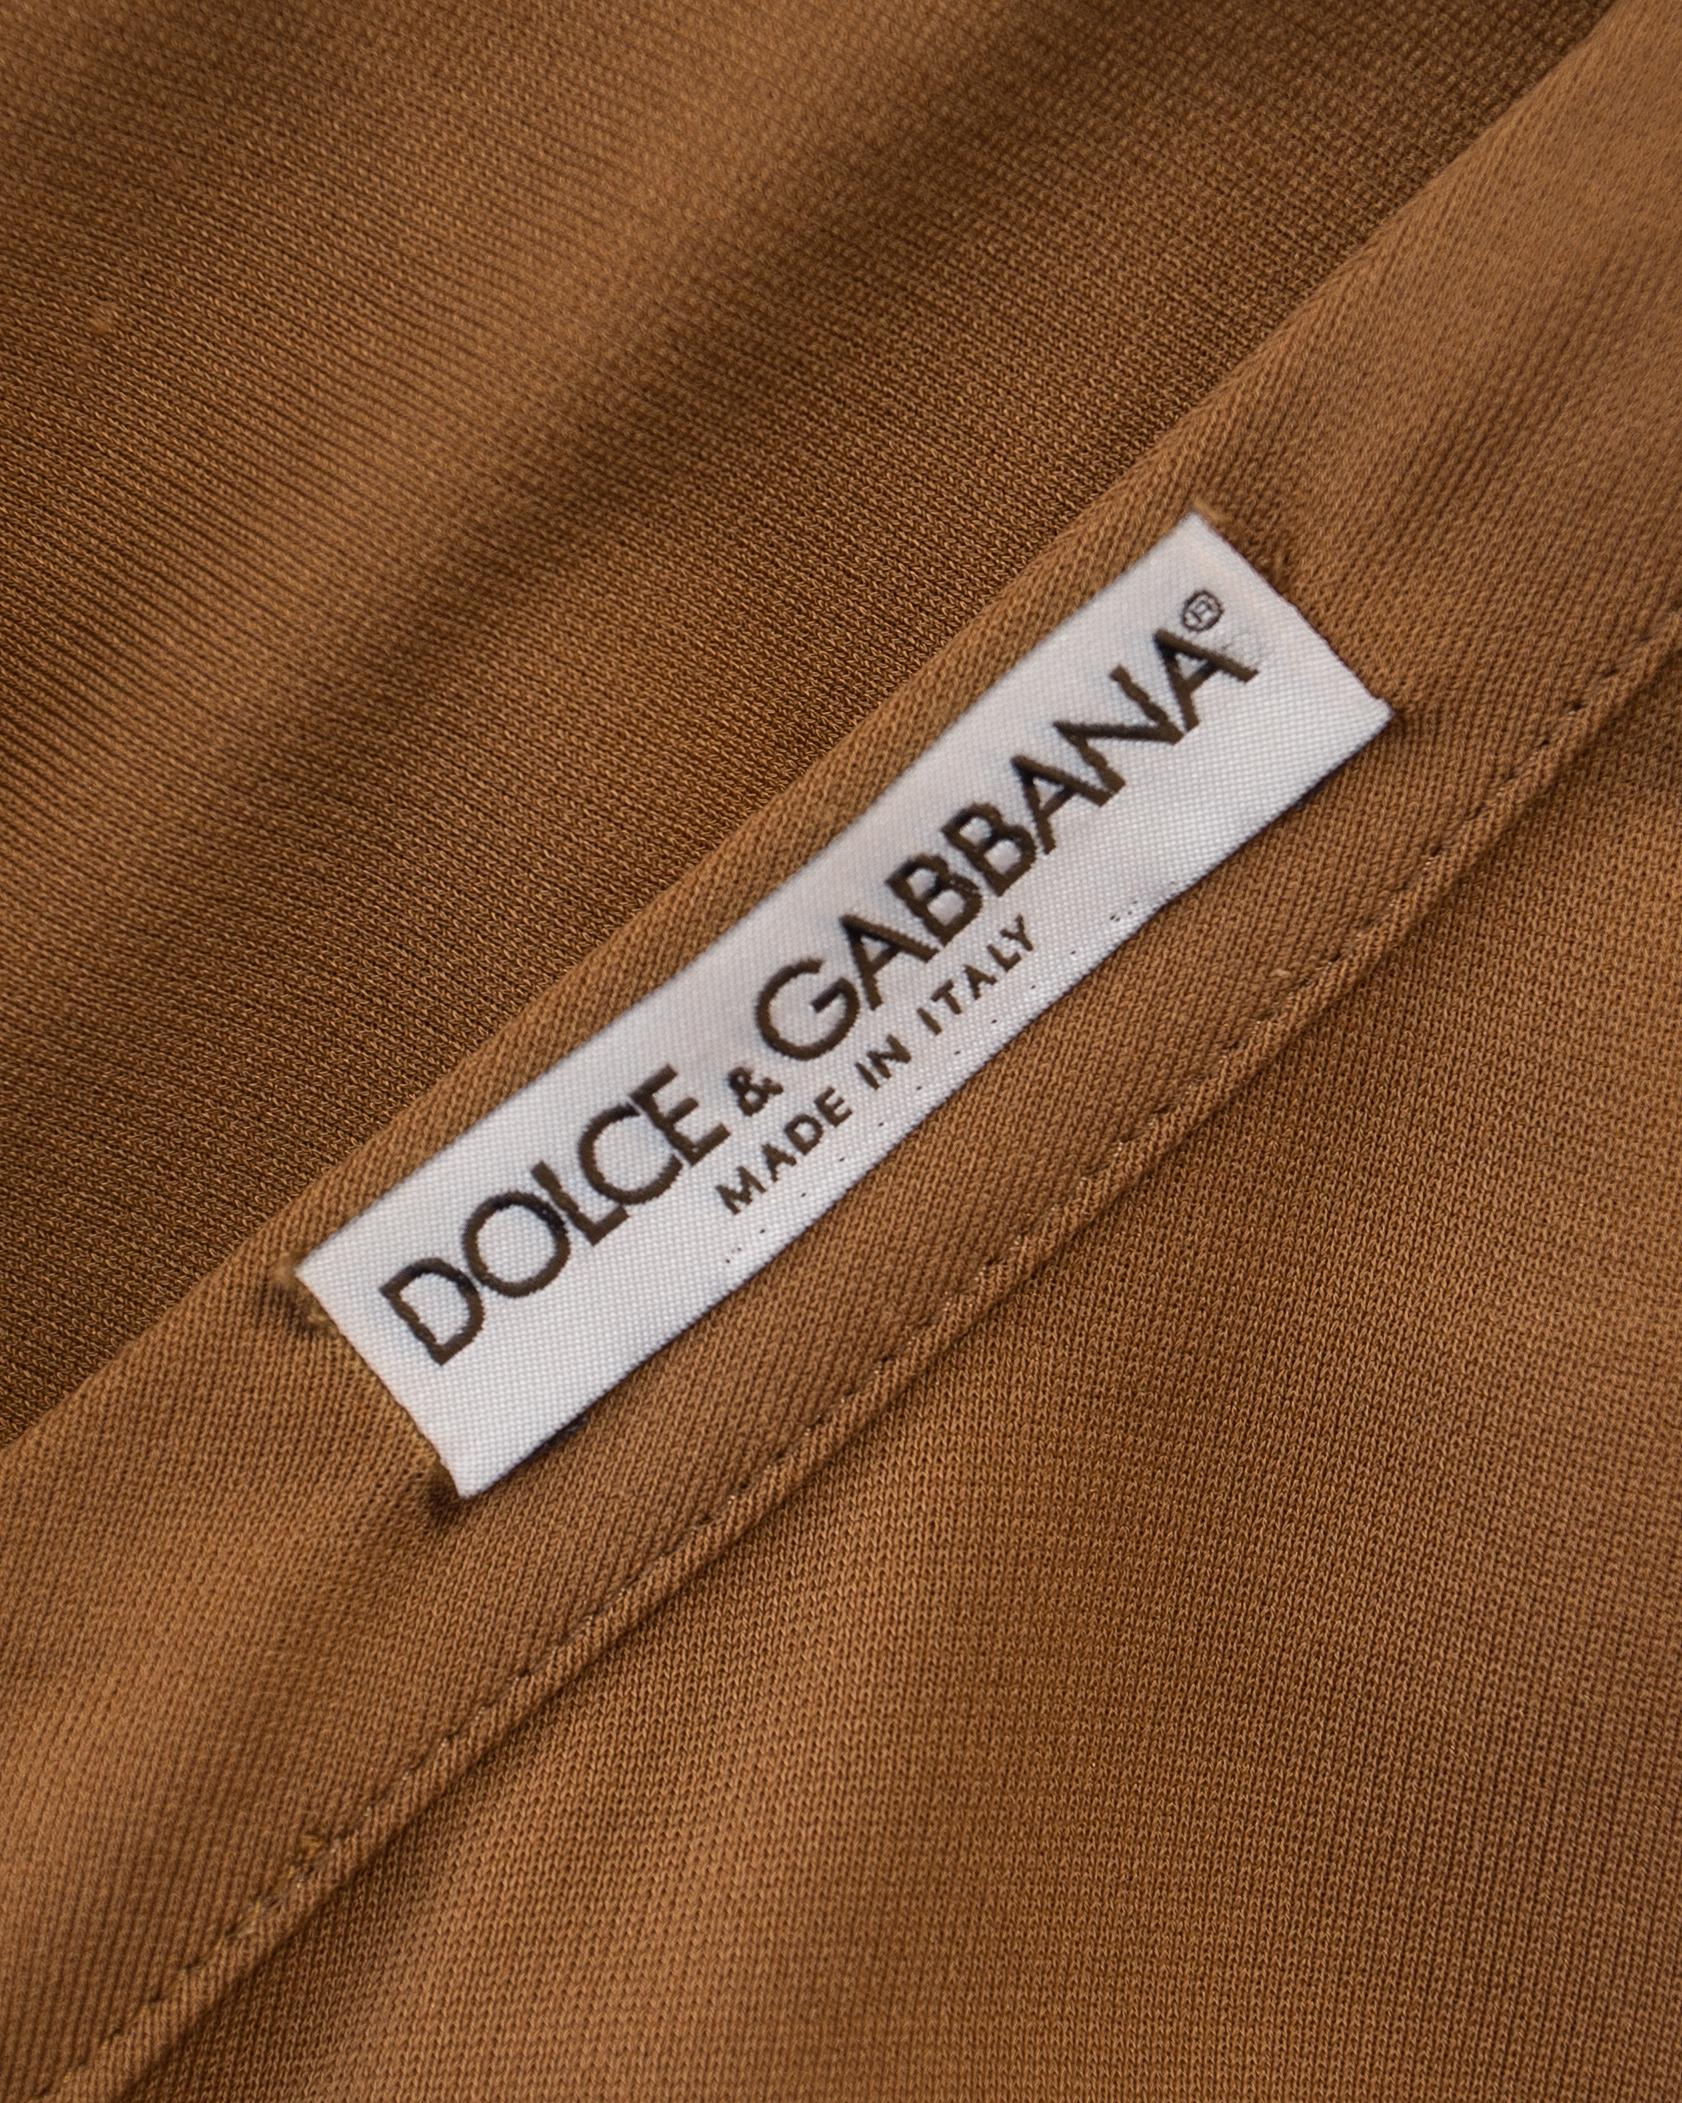 Dolce & Gabbana nude bodycon bondage choker dress, ca. 1990-1999 1